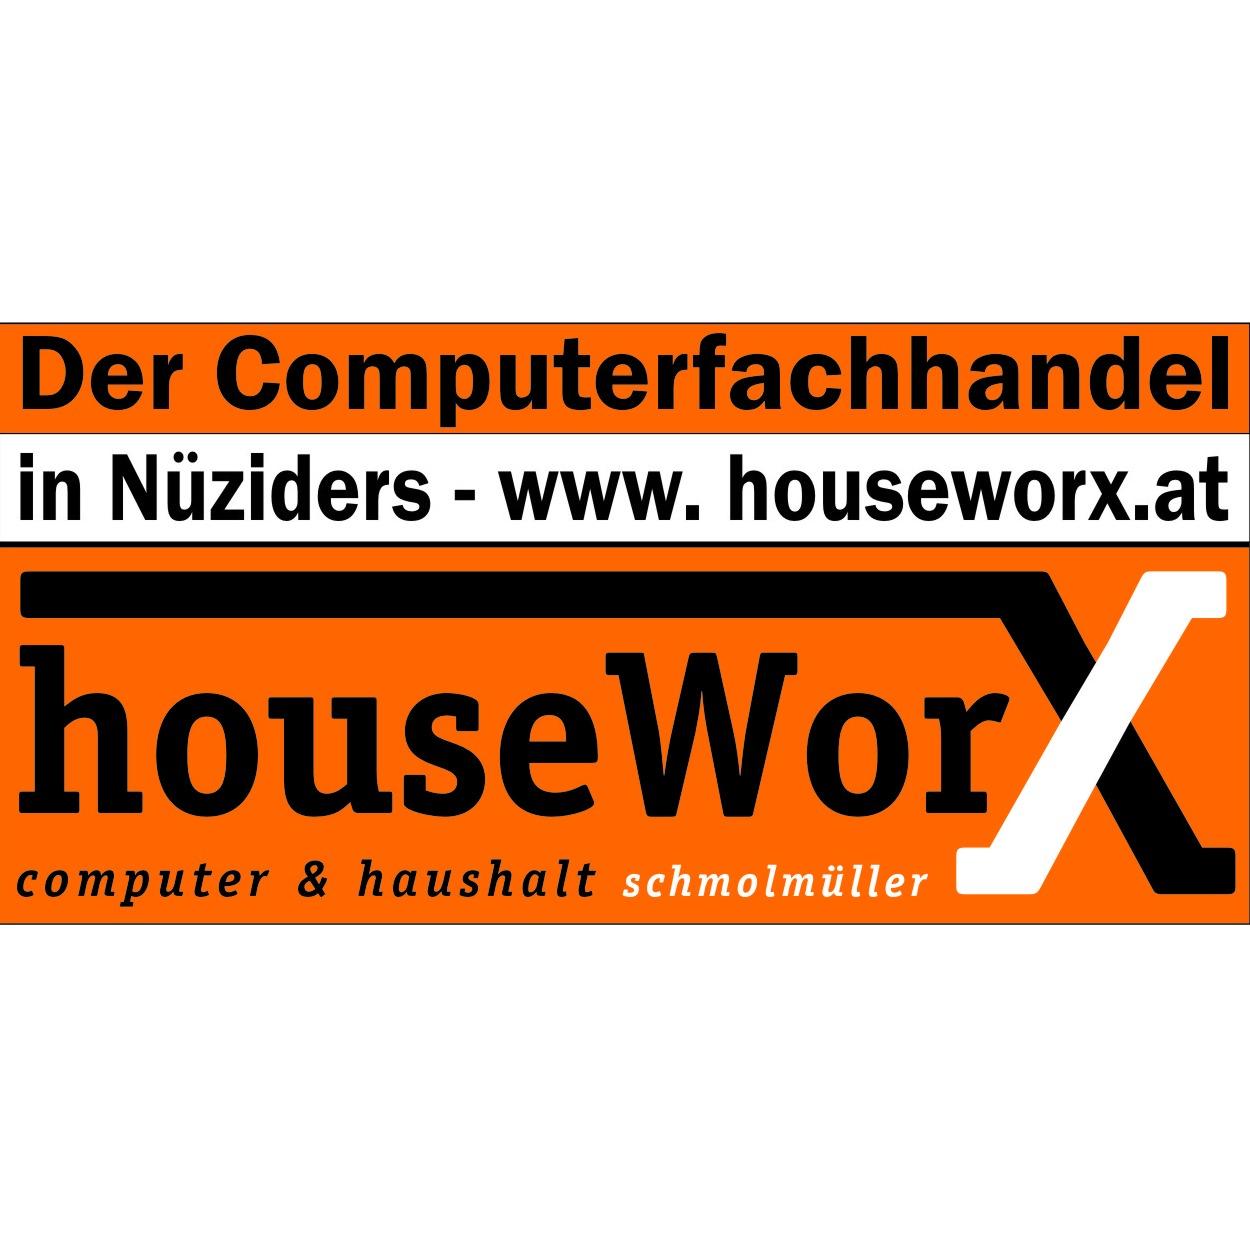 houseWorX Computer & Haushalt - Claudio Schmolmüller Logo